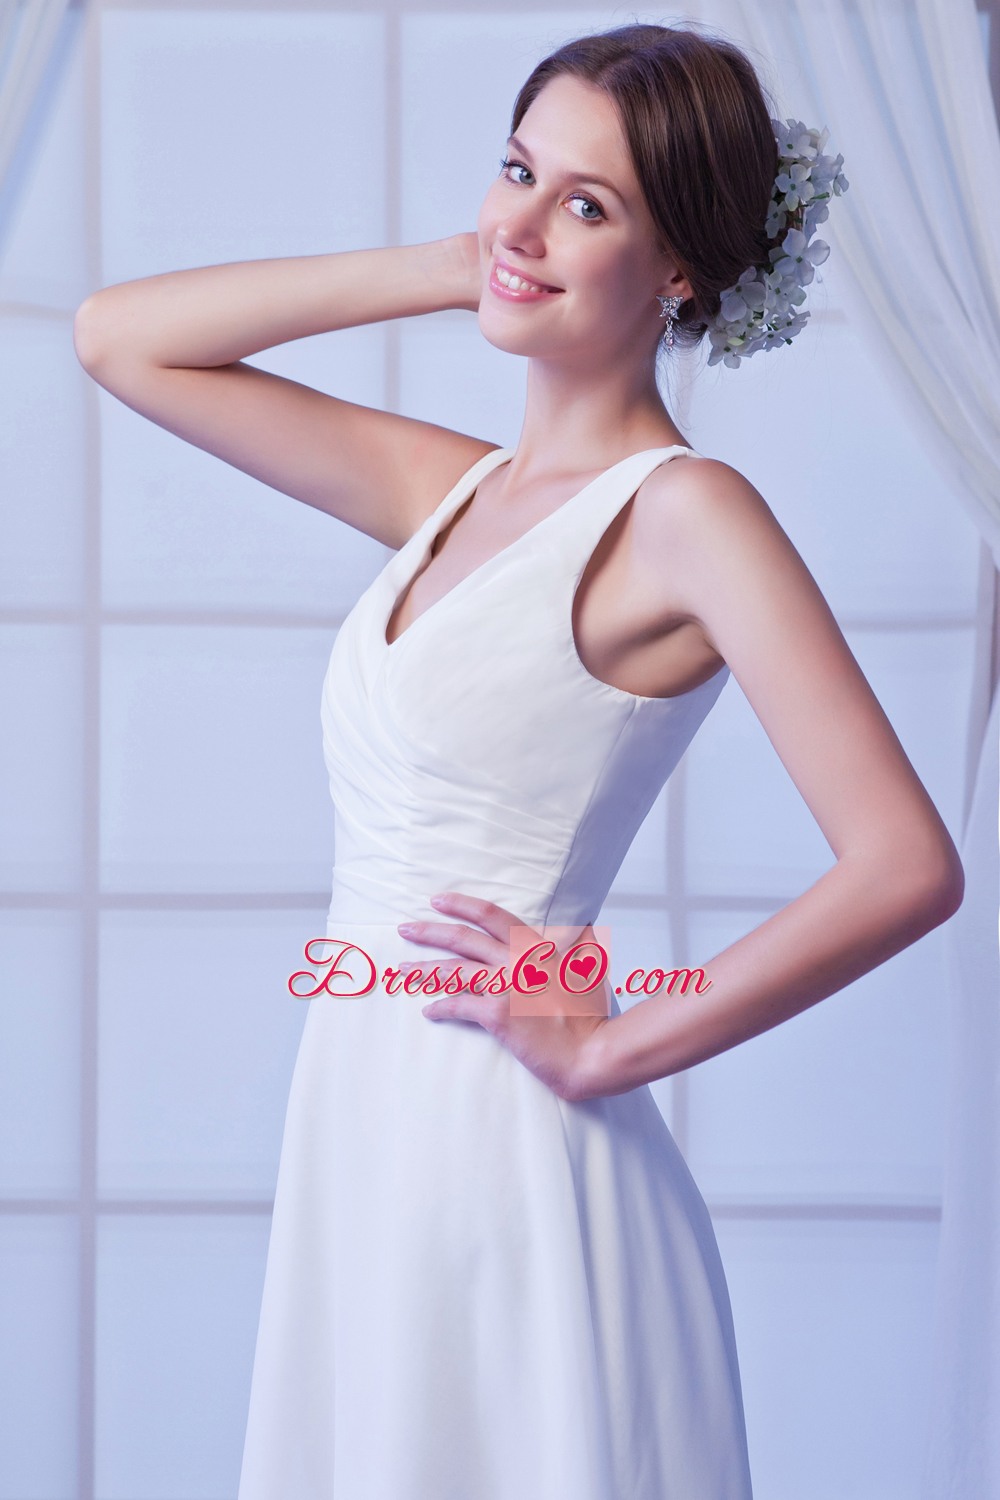 Simple A-line V-neck Knee-length Chiffon Wedding Dress